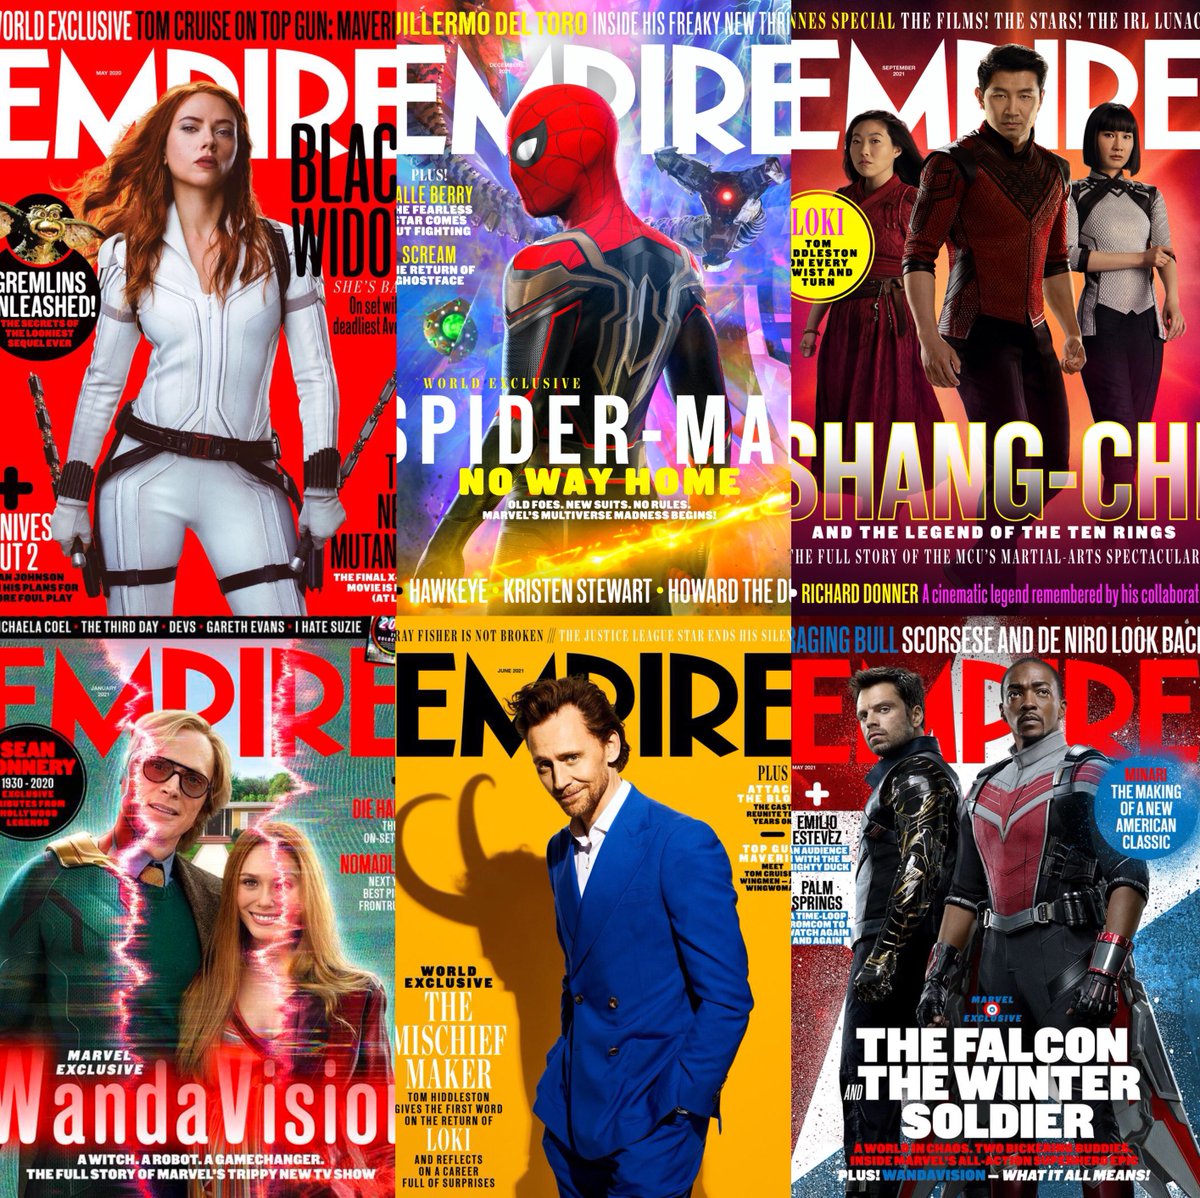 RT @civiiswar: 2021 phase 4 empire covers  #SpiderManNoWayHome https://t.co/JTLKDKg9WZ